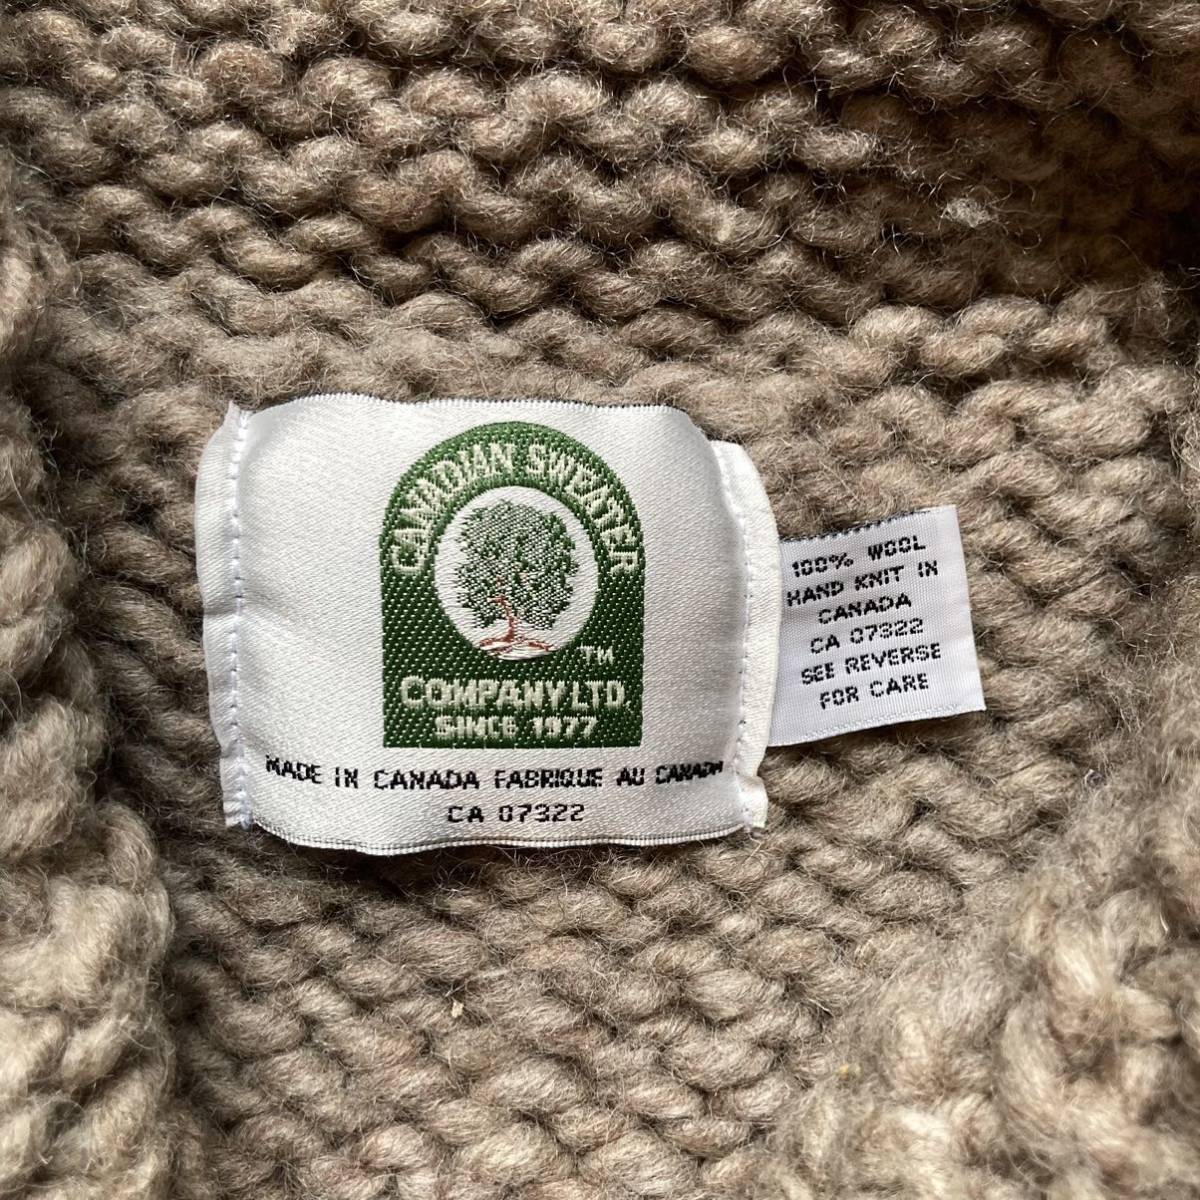 Canadian sweater cowichan sweater “wool100%” “hand knit in Canada” カナディアンセーター カウチンセーター ハンドニット カナダ製_画像8